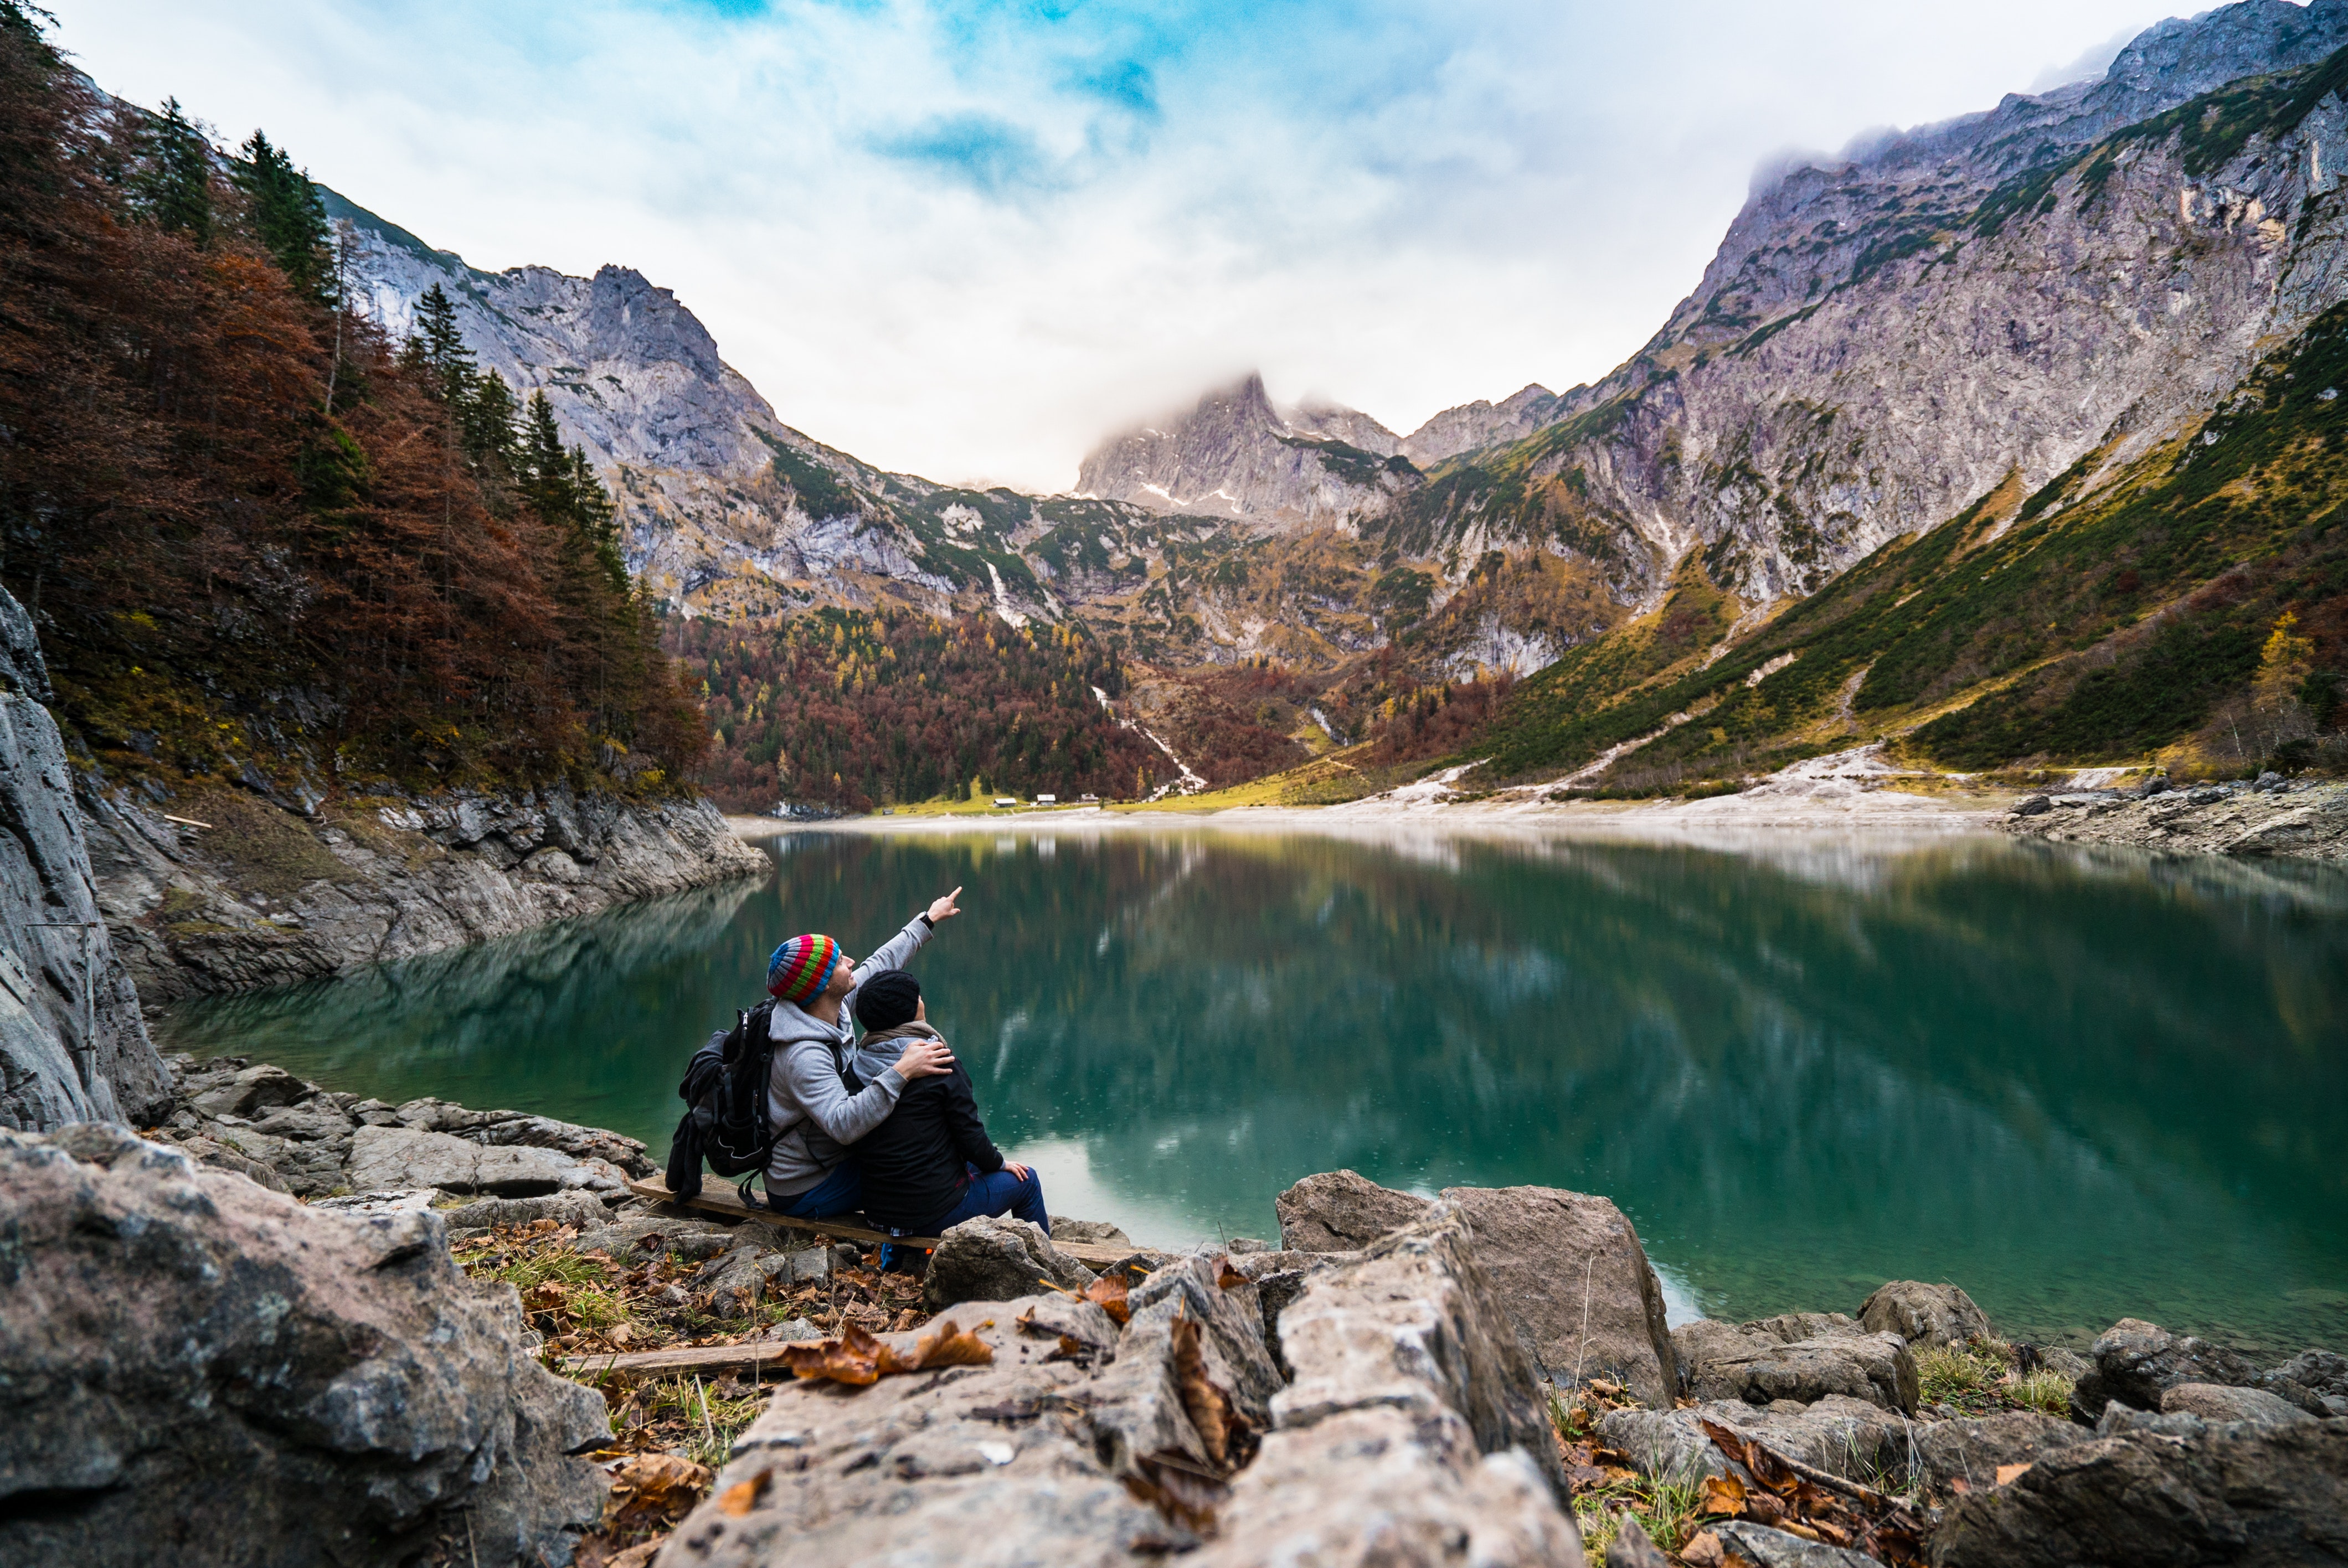 Couple at scenic lake | Source: Pexels